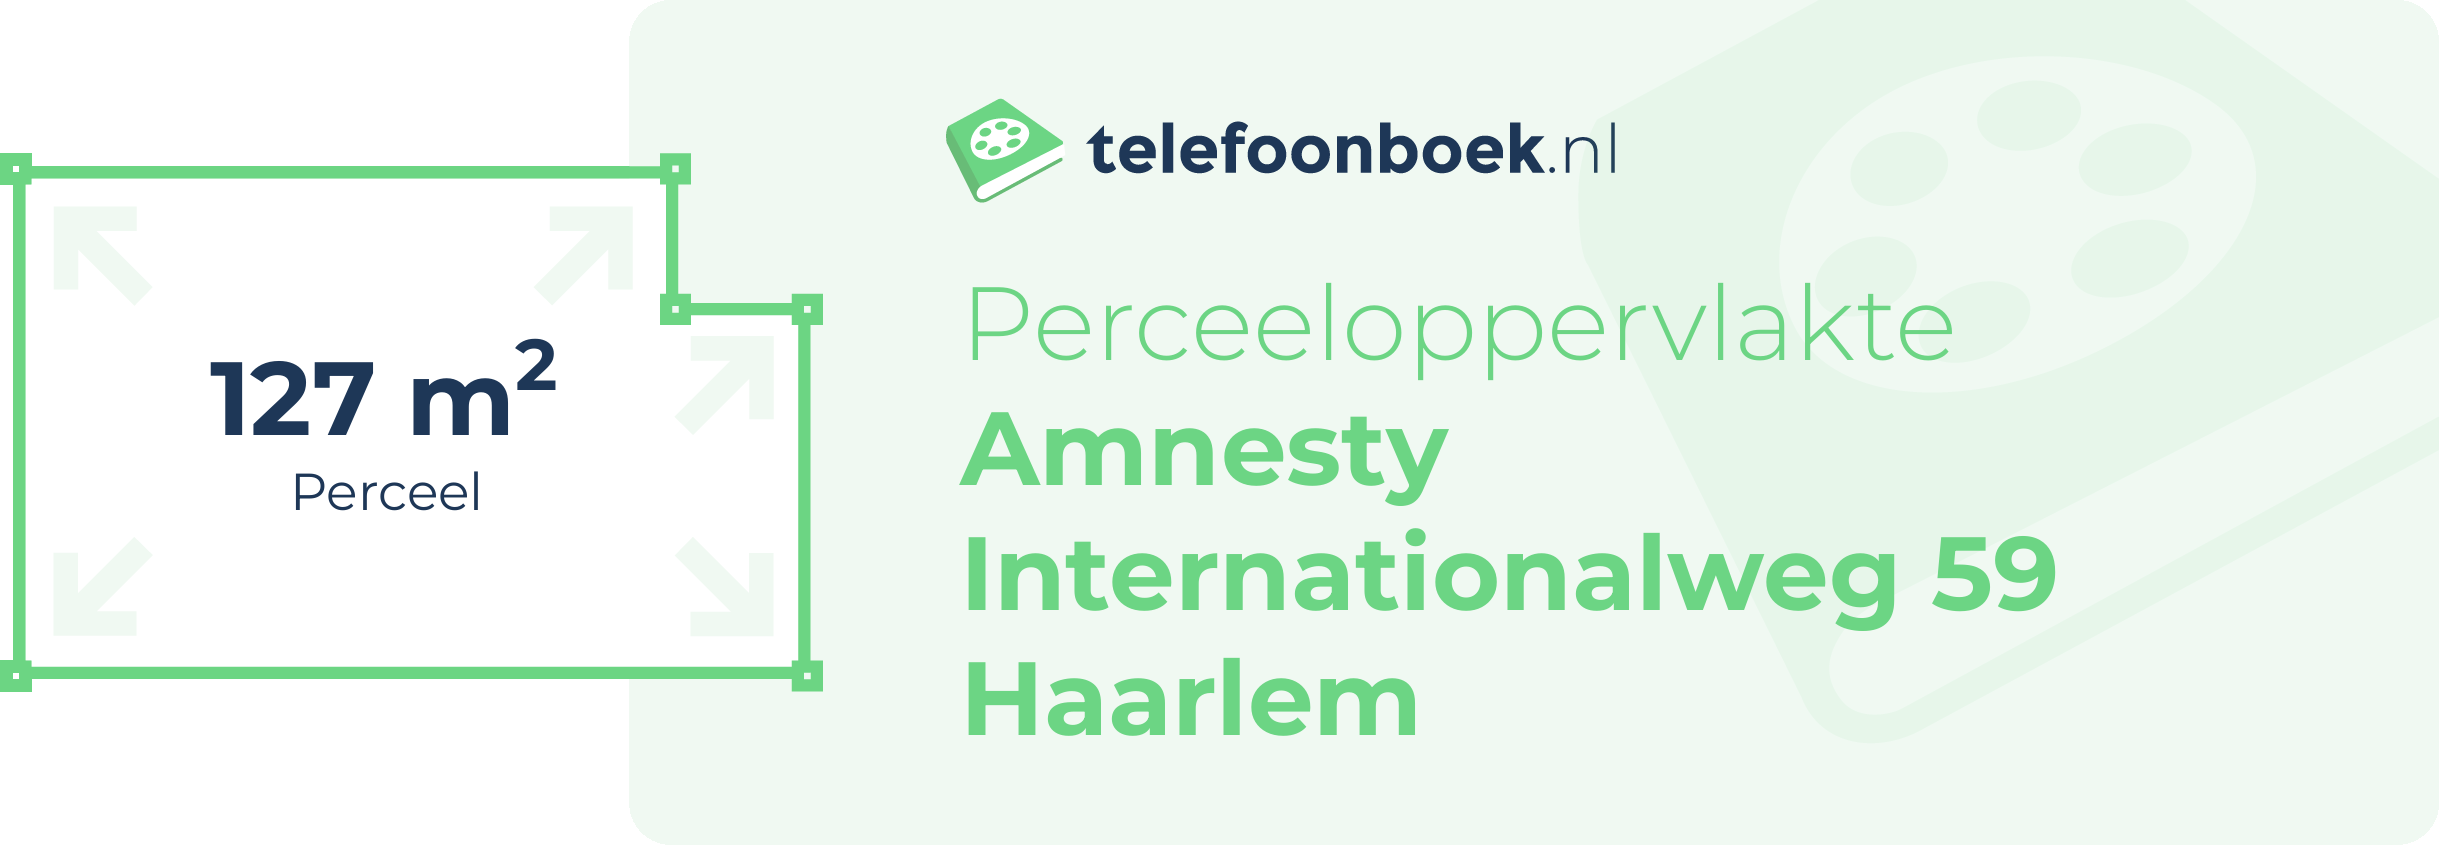 Perceeloppervlakte Amnesty Internationalweg 59 Haarlem